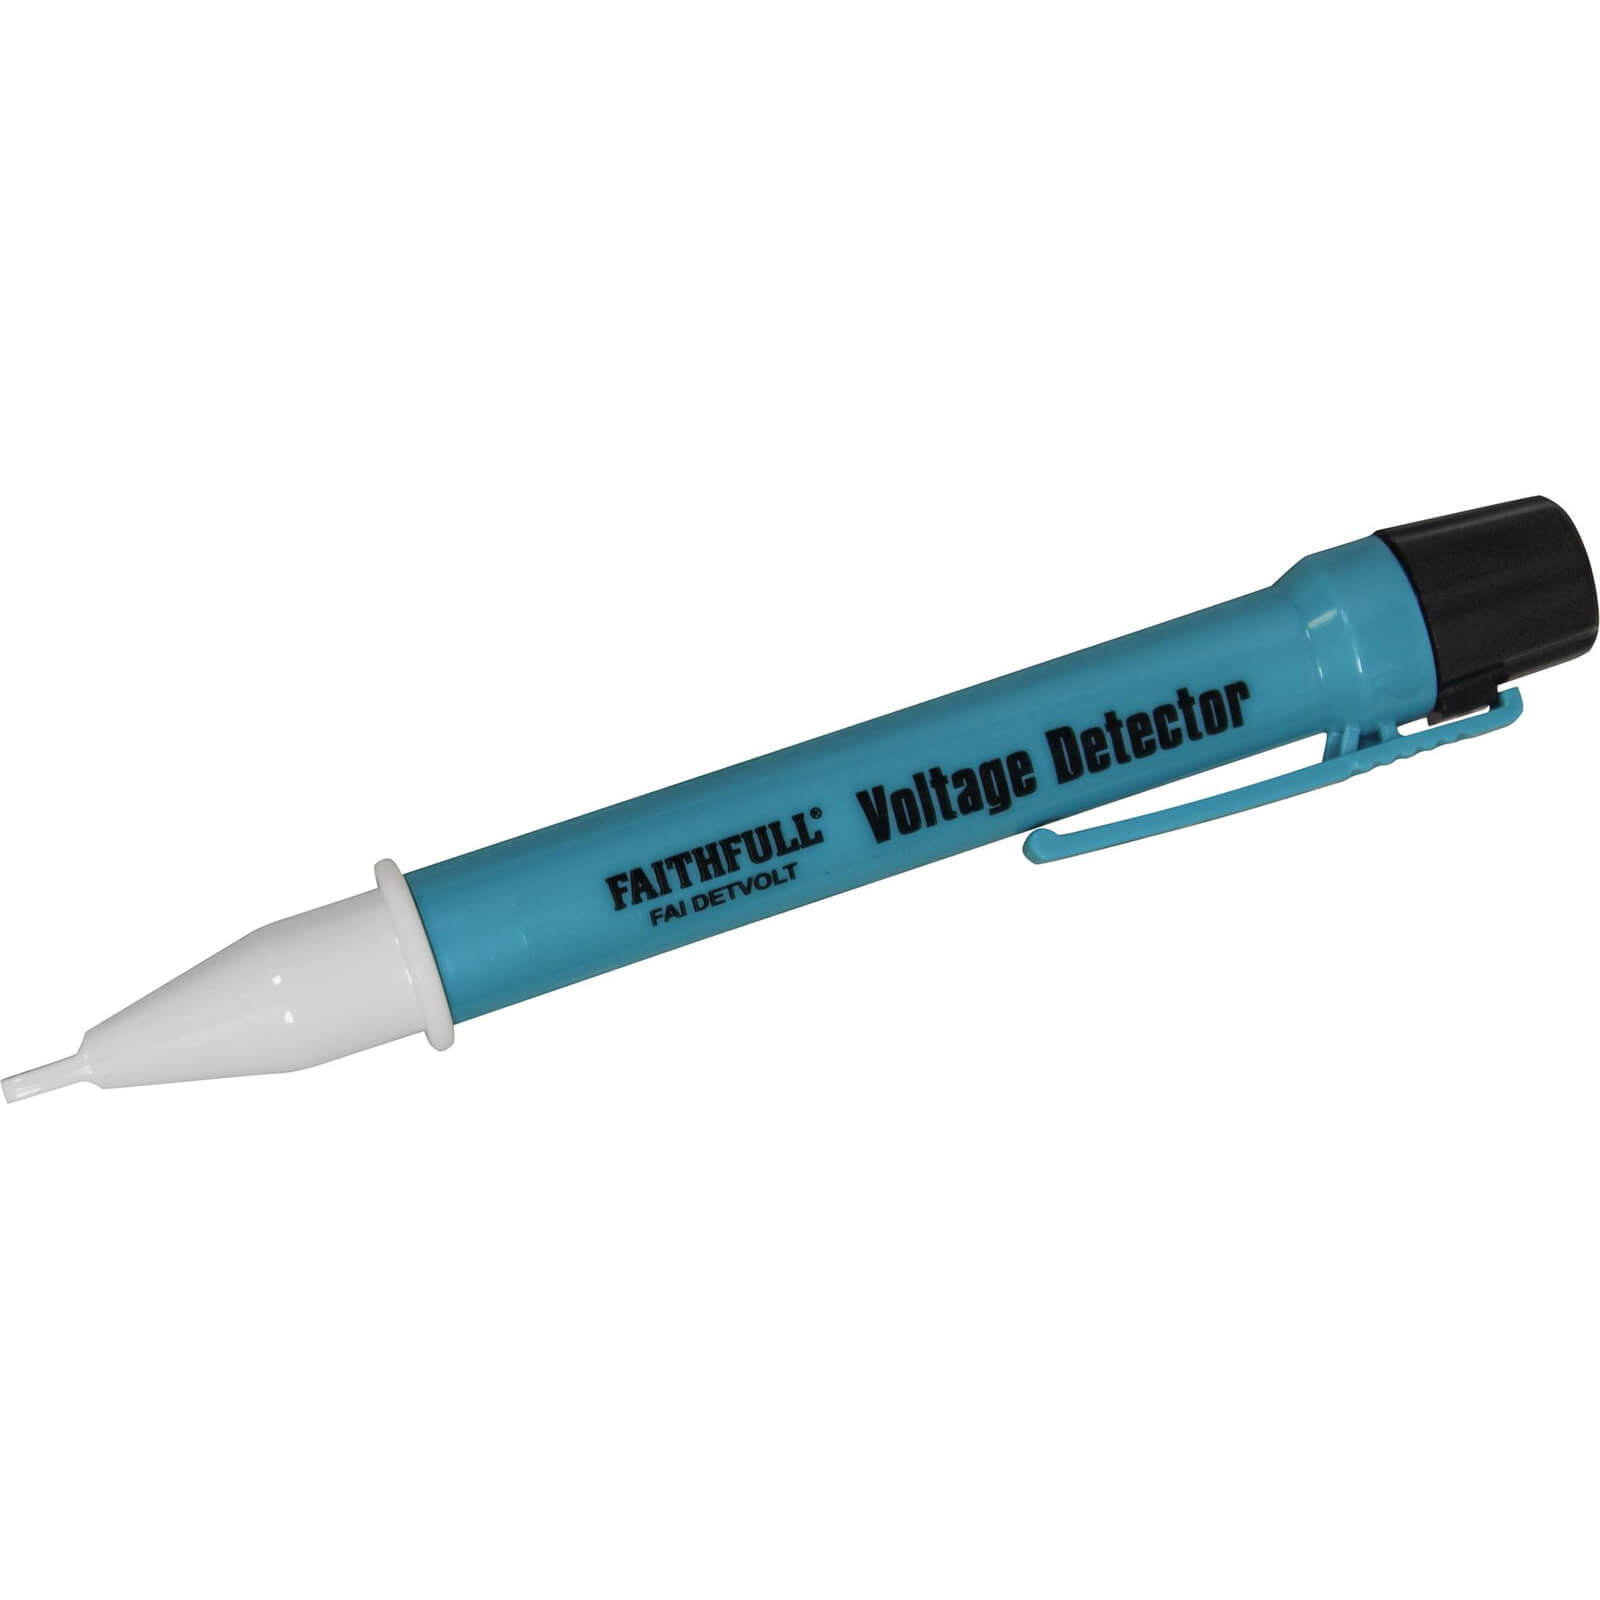 Image of Faithfull Pen Voltage Detector